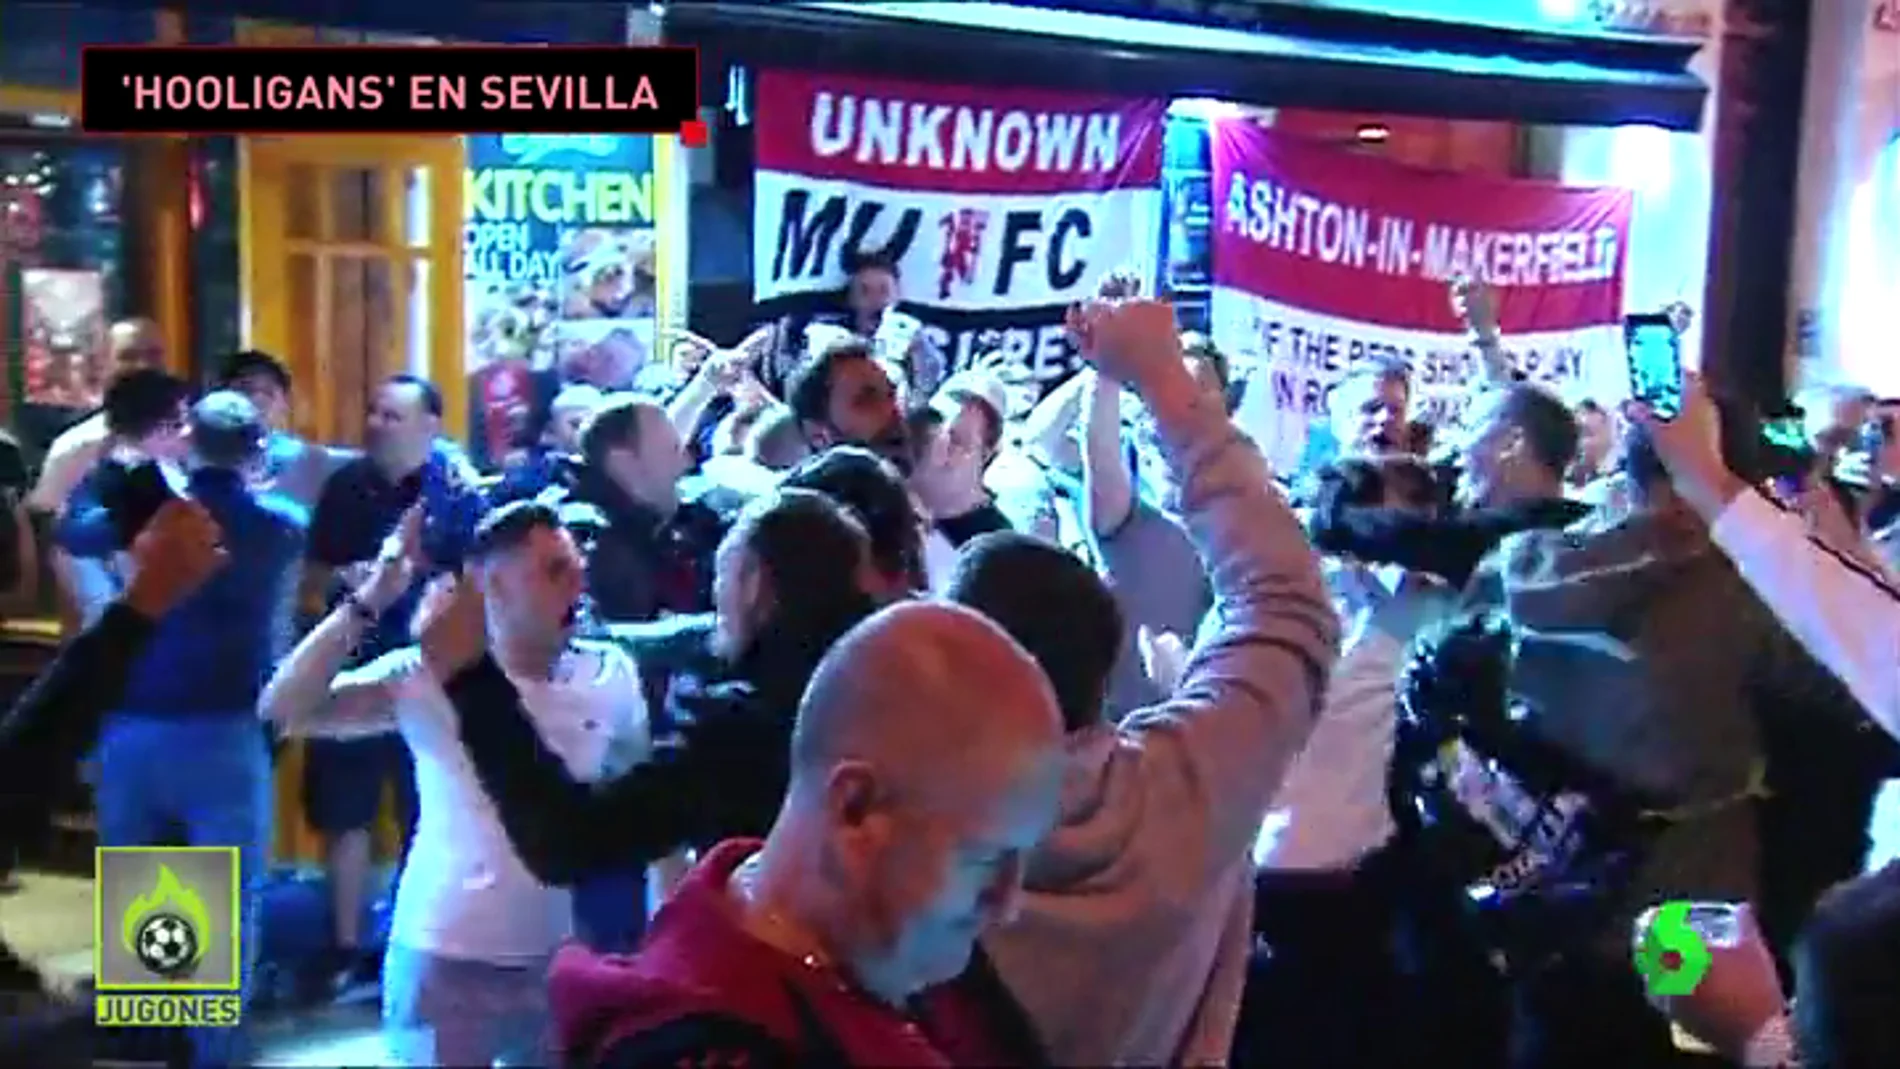 Los hooligans del Manchester United se hacen notar en Sevilla